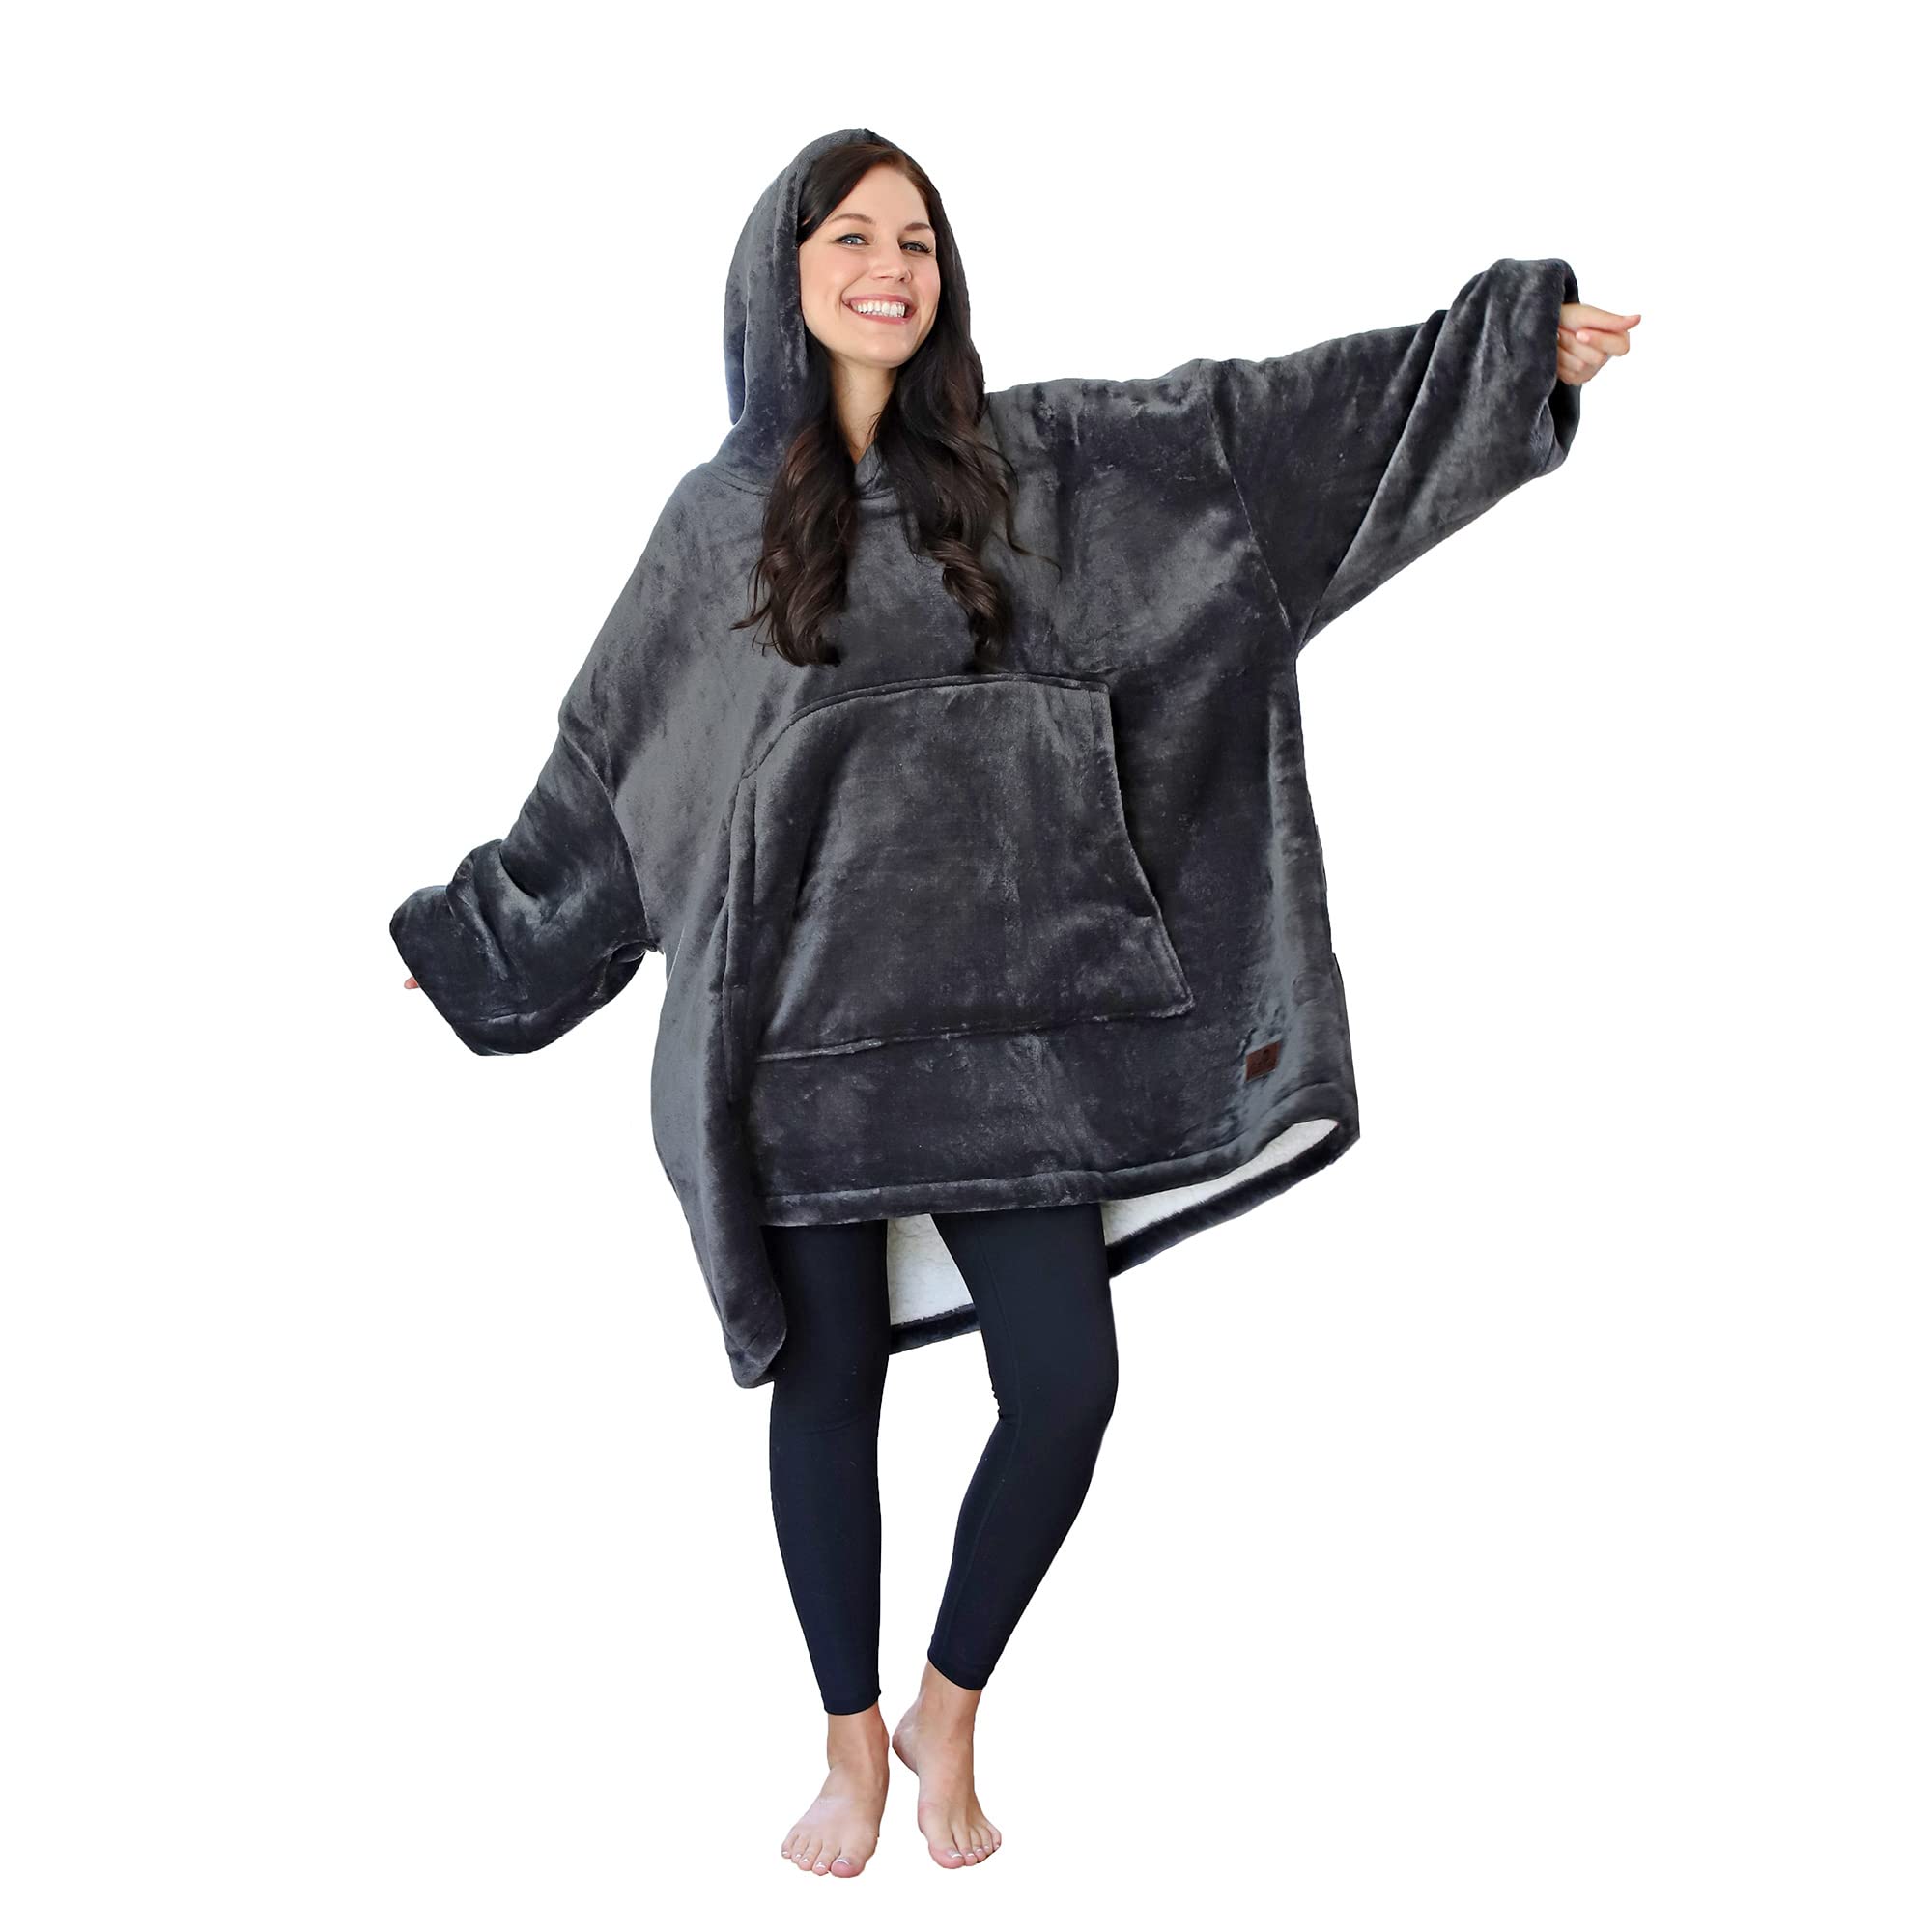 Catalonia Oversized Blanket Hoodie Sweatshirt, Wearable Sherpa Lounging Pullover for Adults Women Men